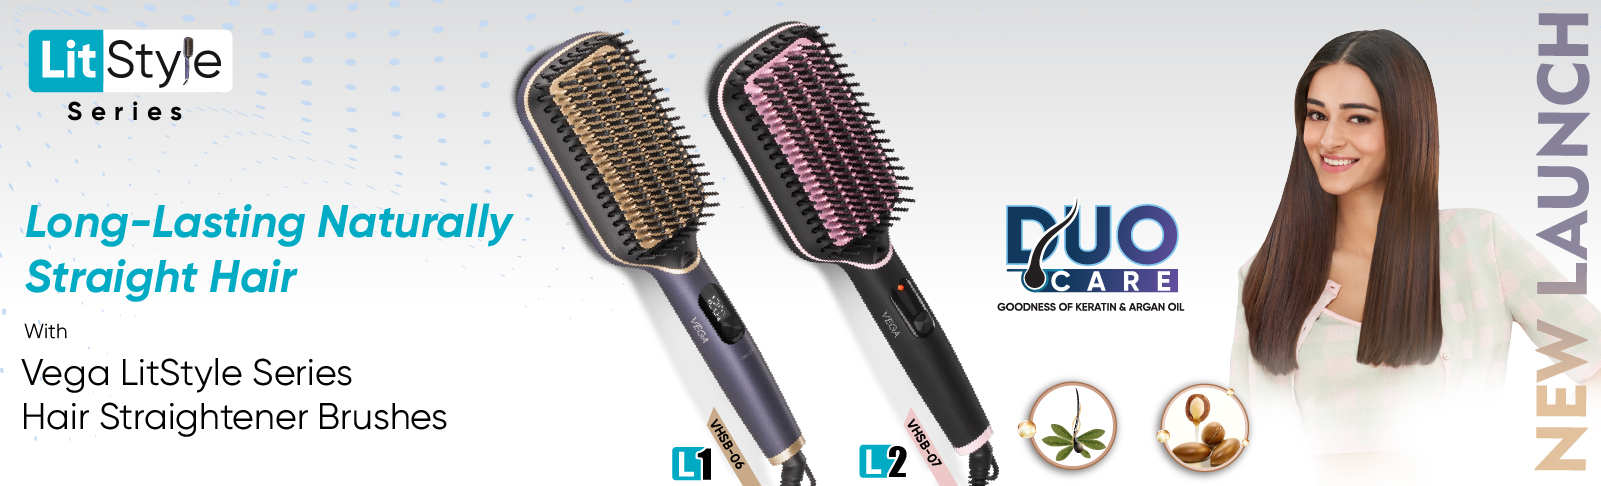 Lit style L2 Hair Straightener Brush